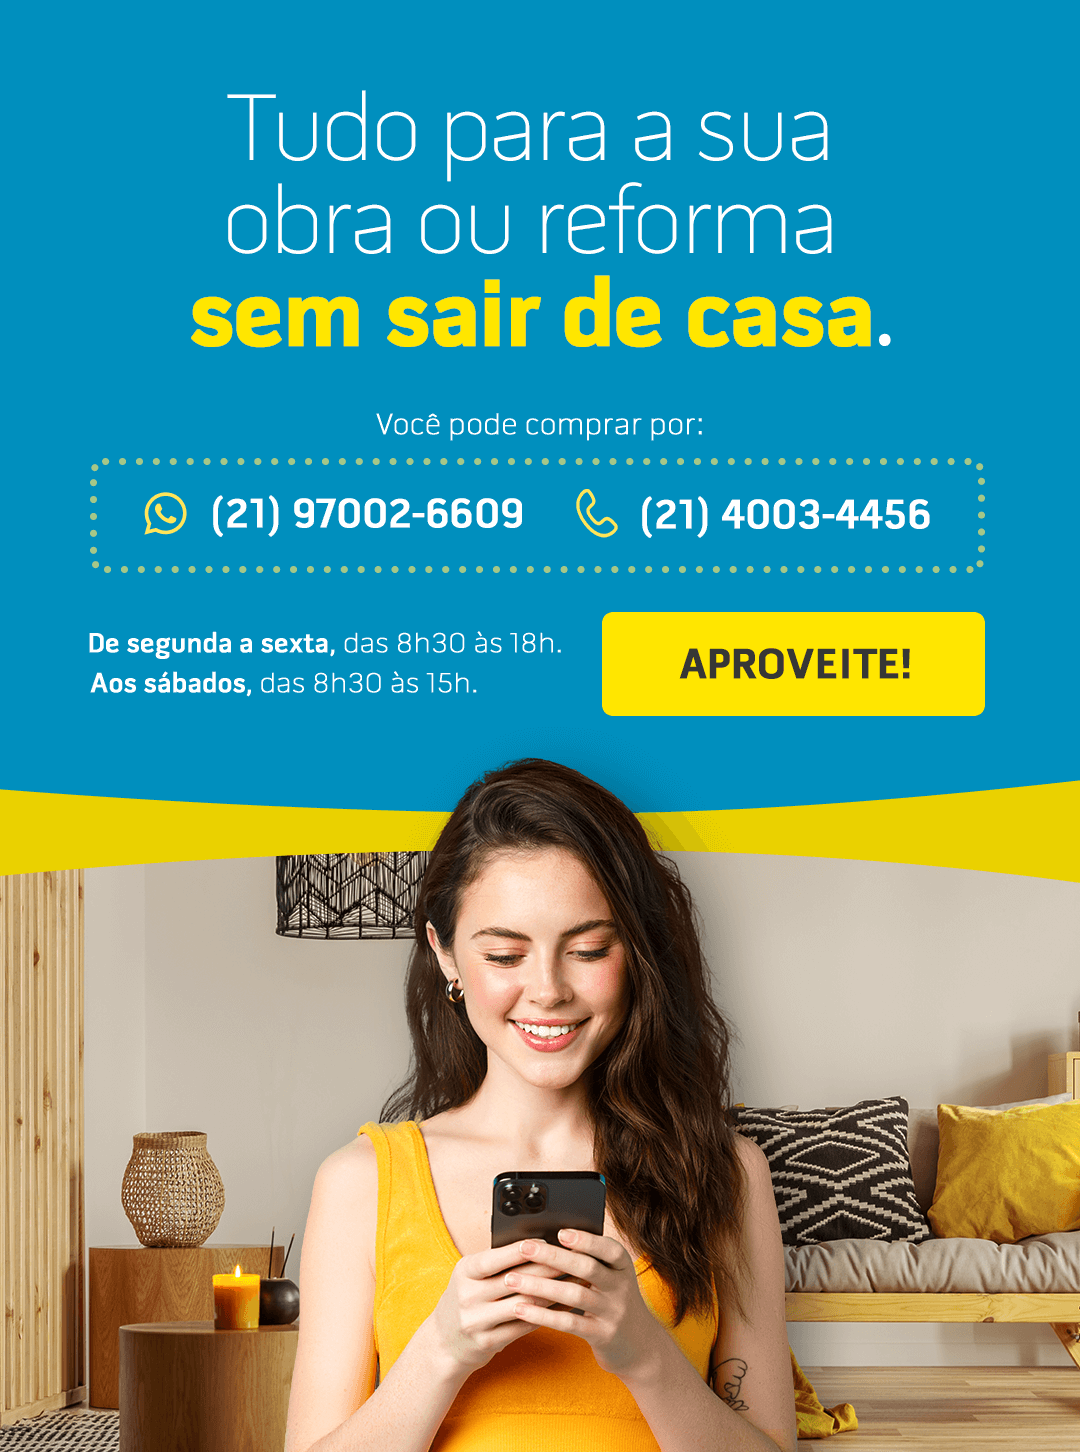 Whatsapp - Televendas - MOBILE